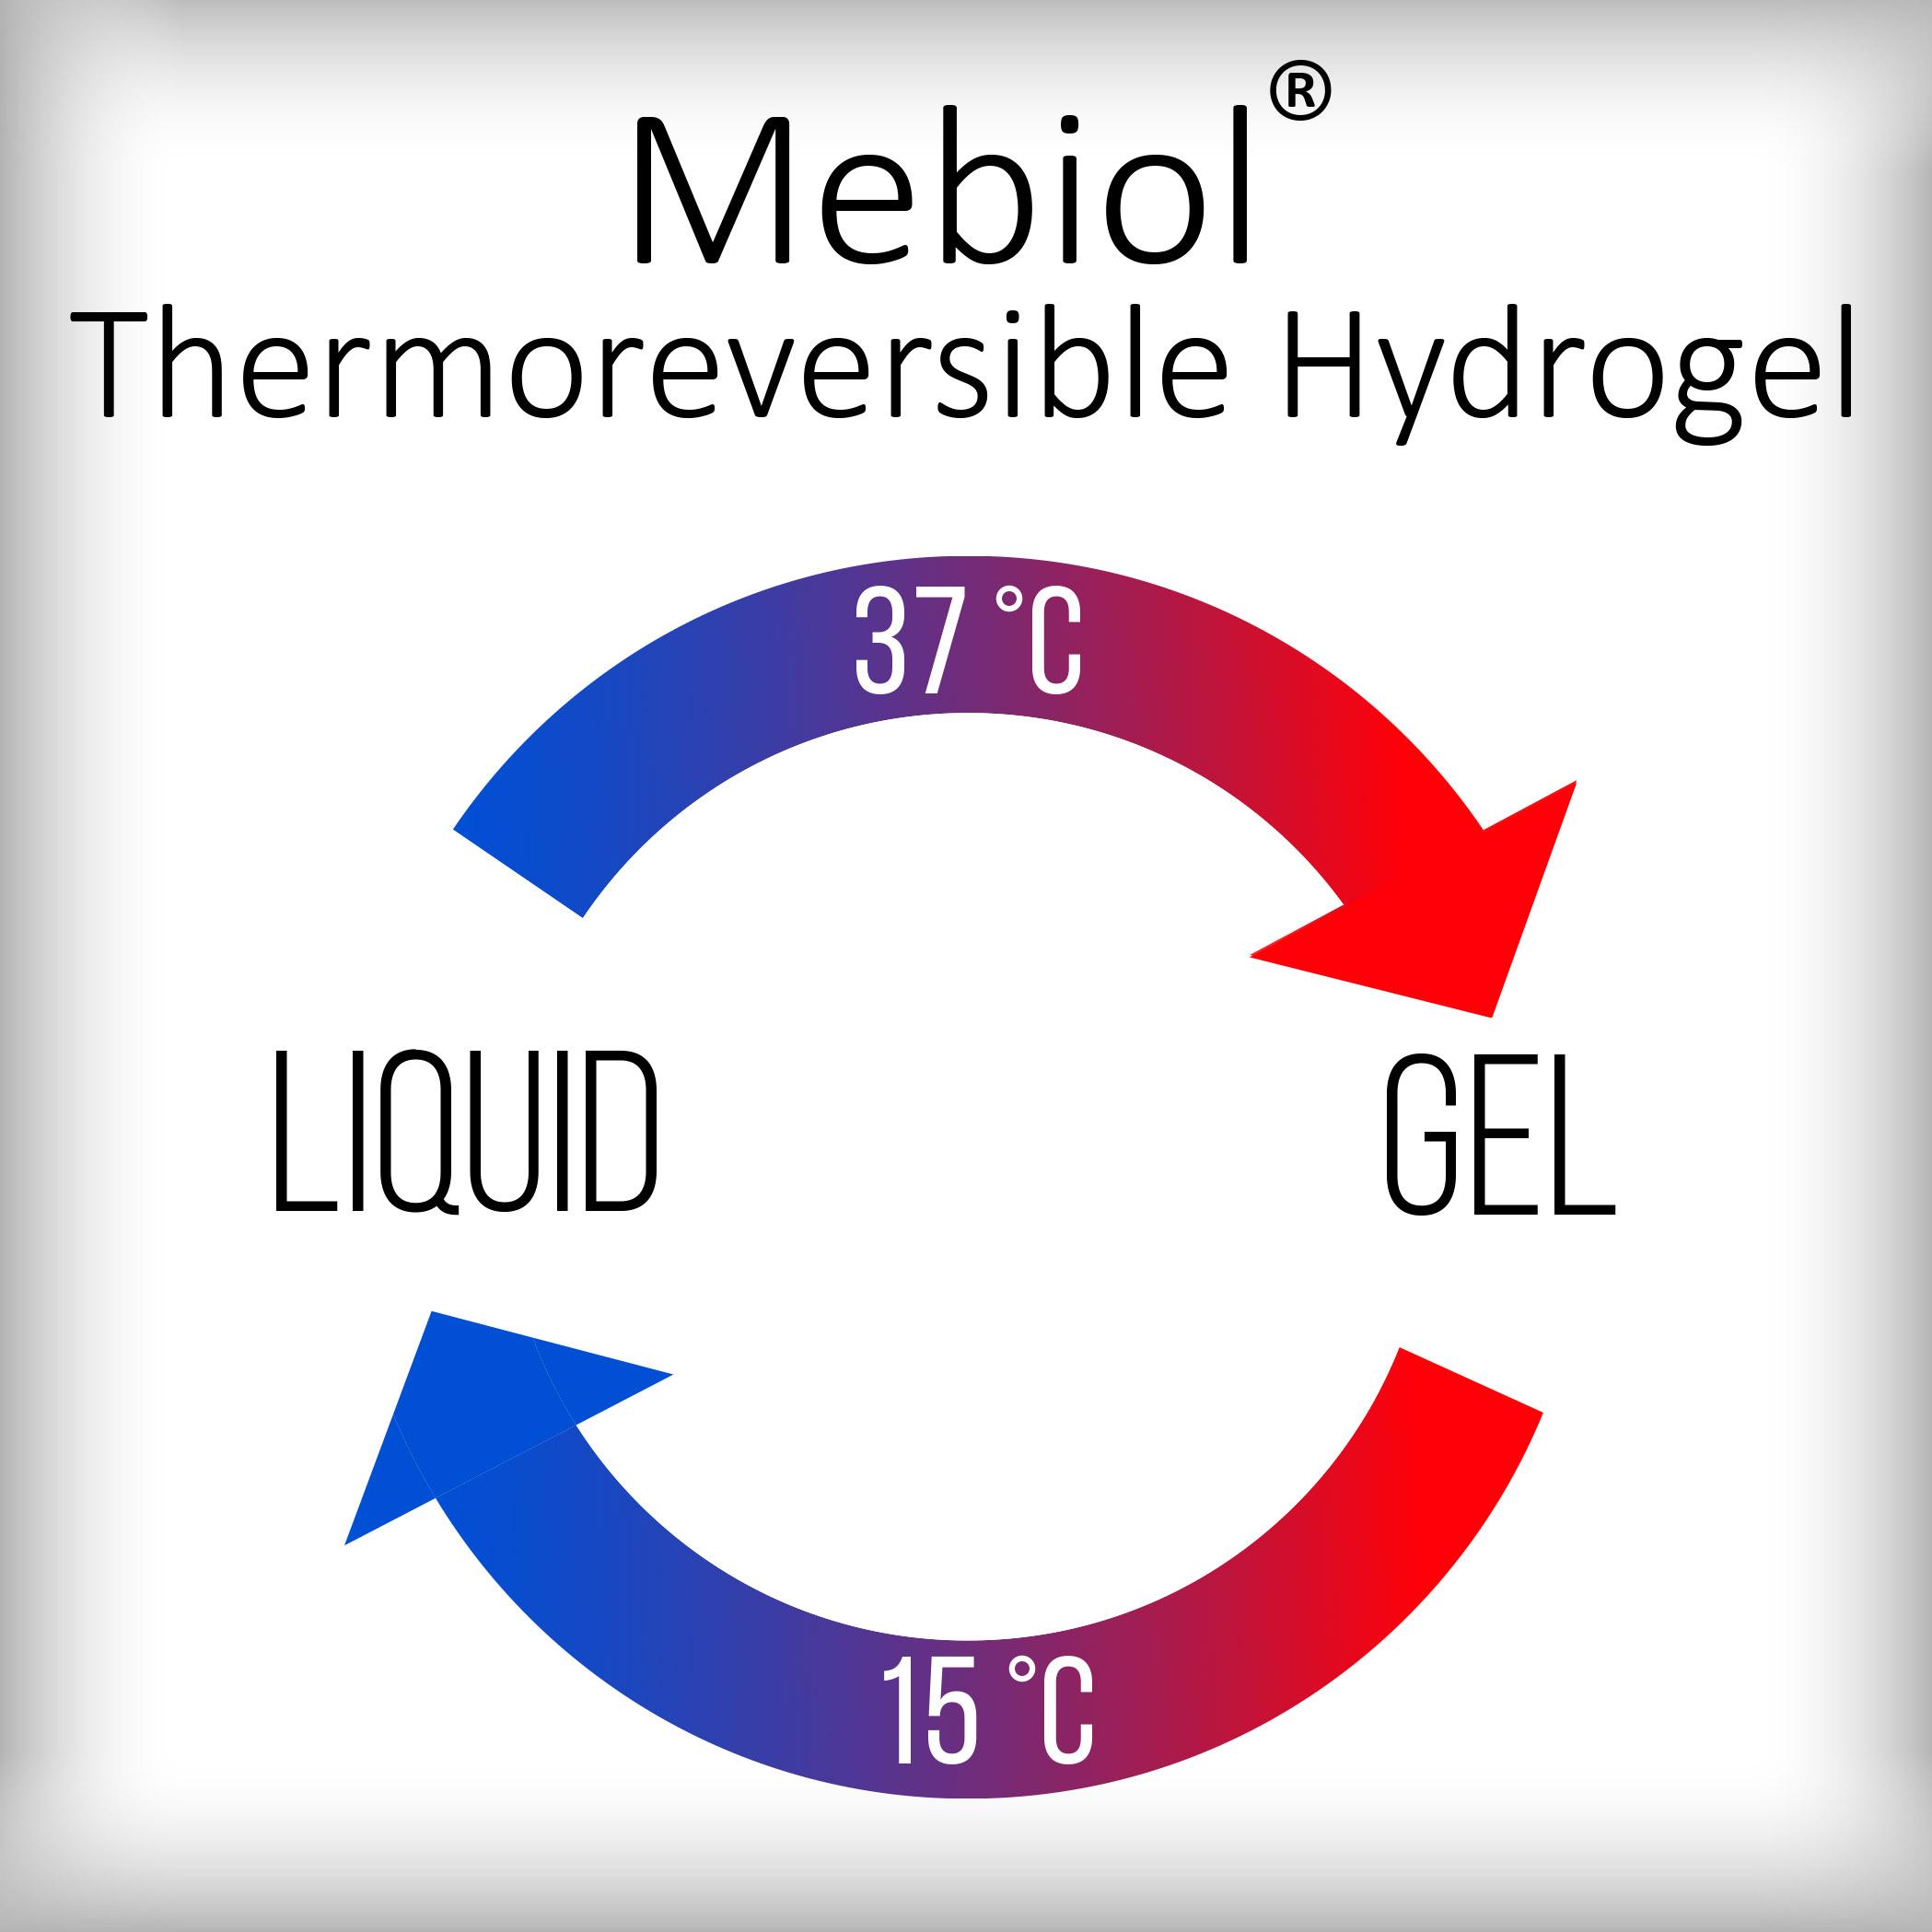 Mebiol thermoreversible hydrogel advanced biomatrix